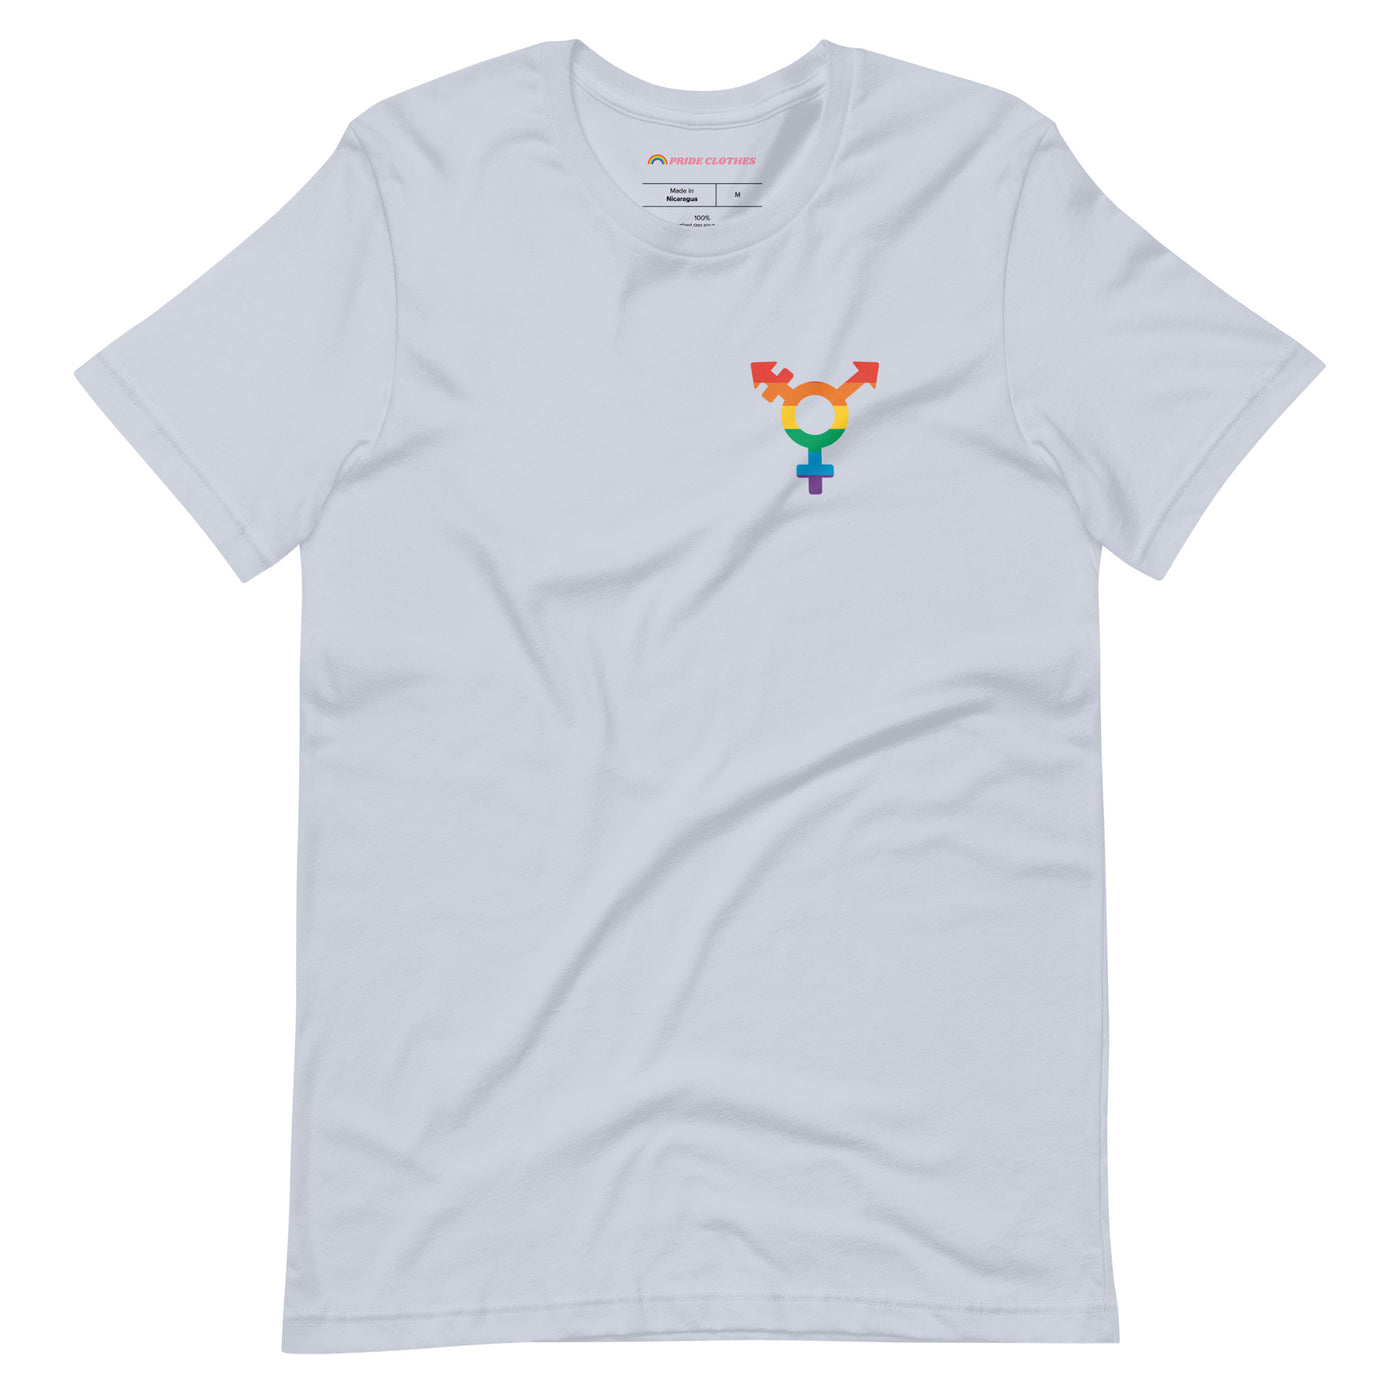 PrideClothes - Trans Pride Colors Symbol Shirt - Light Blue